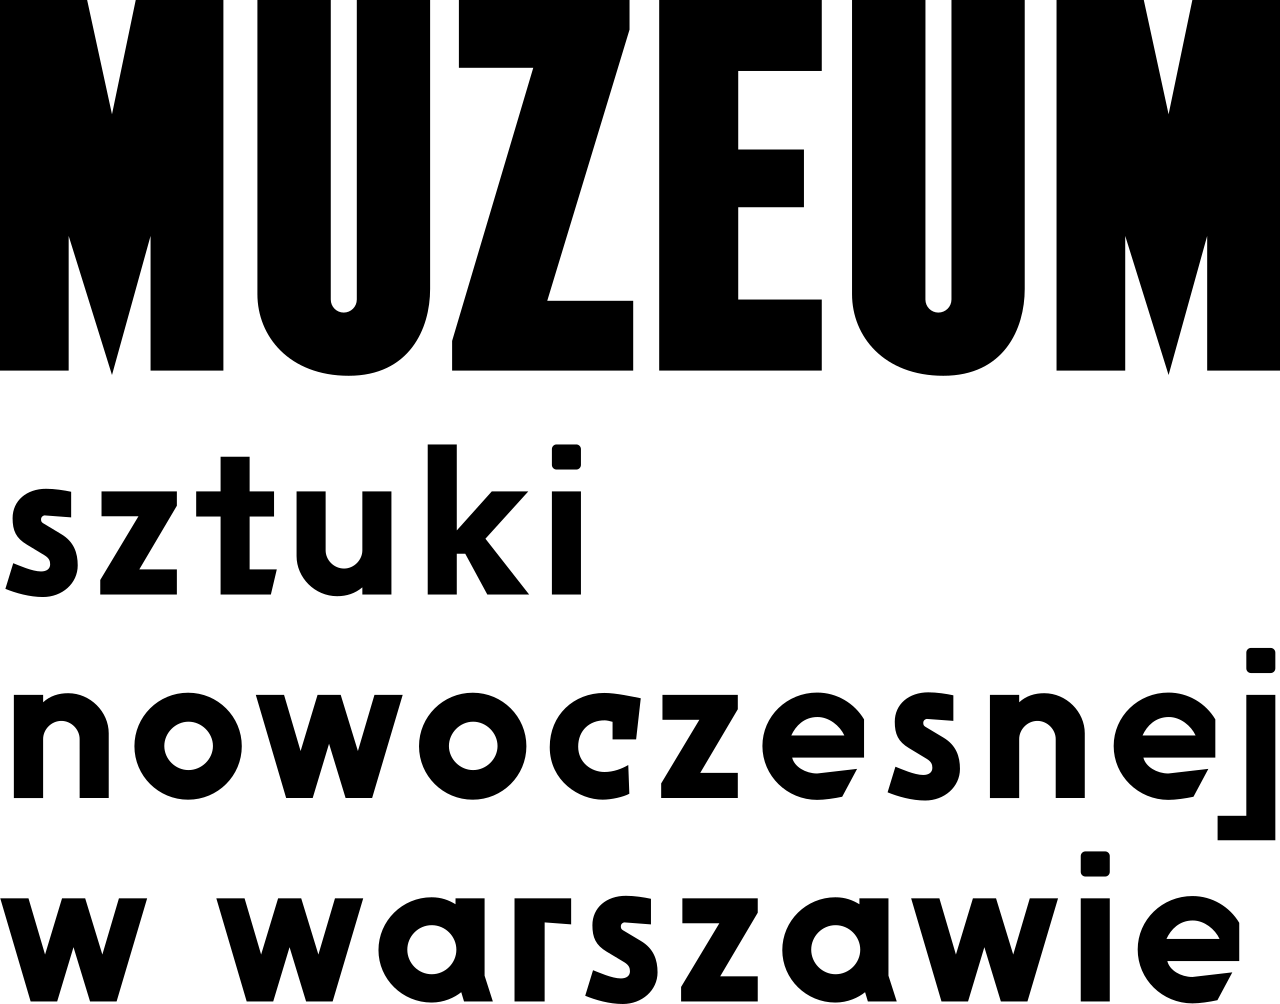 Modern MSN Logo - Museum of Modern Art in Warsaw logo.svg